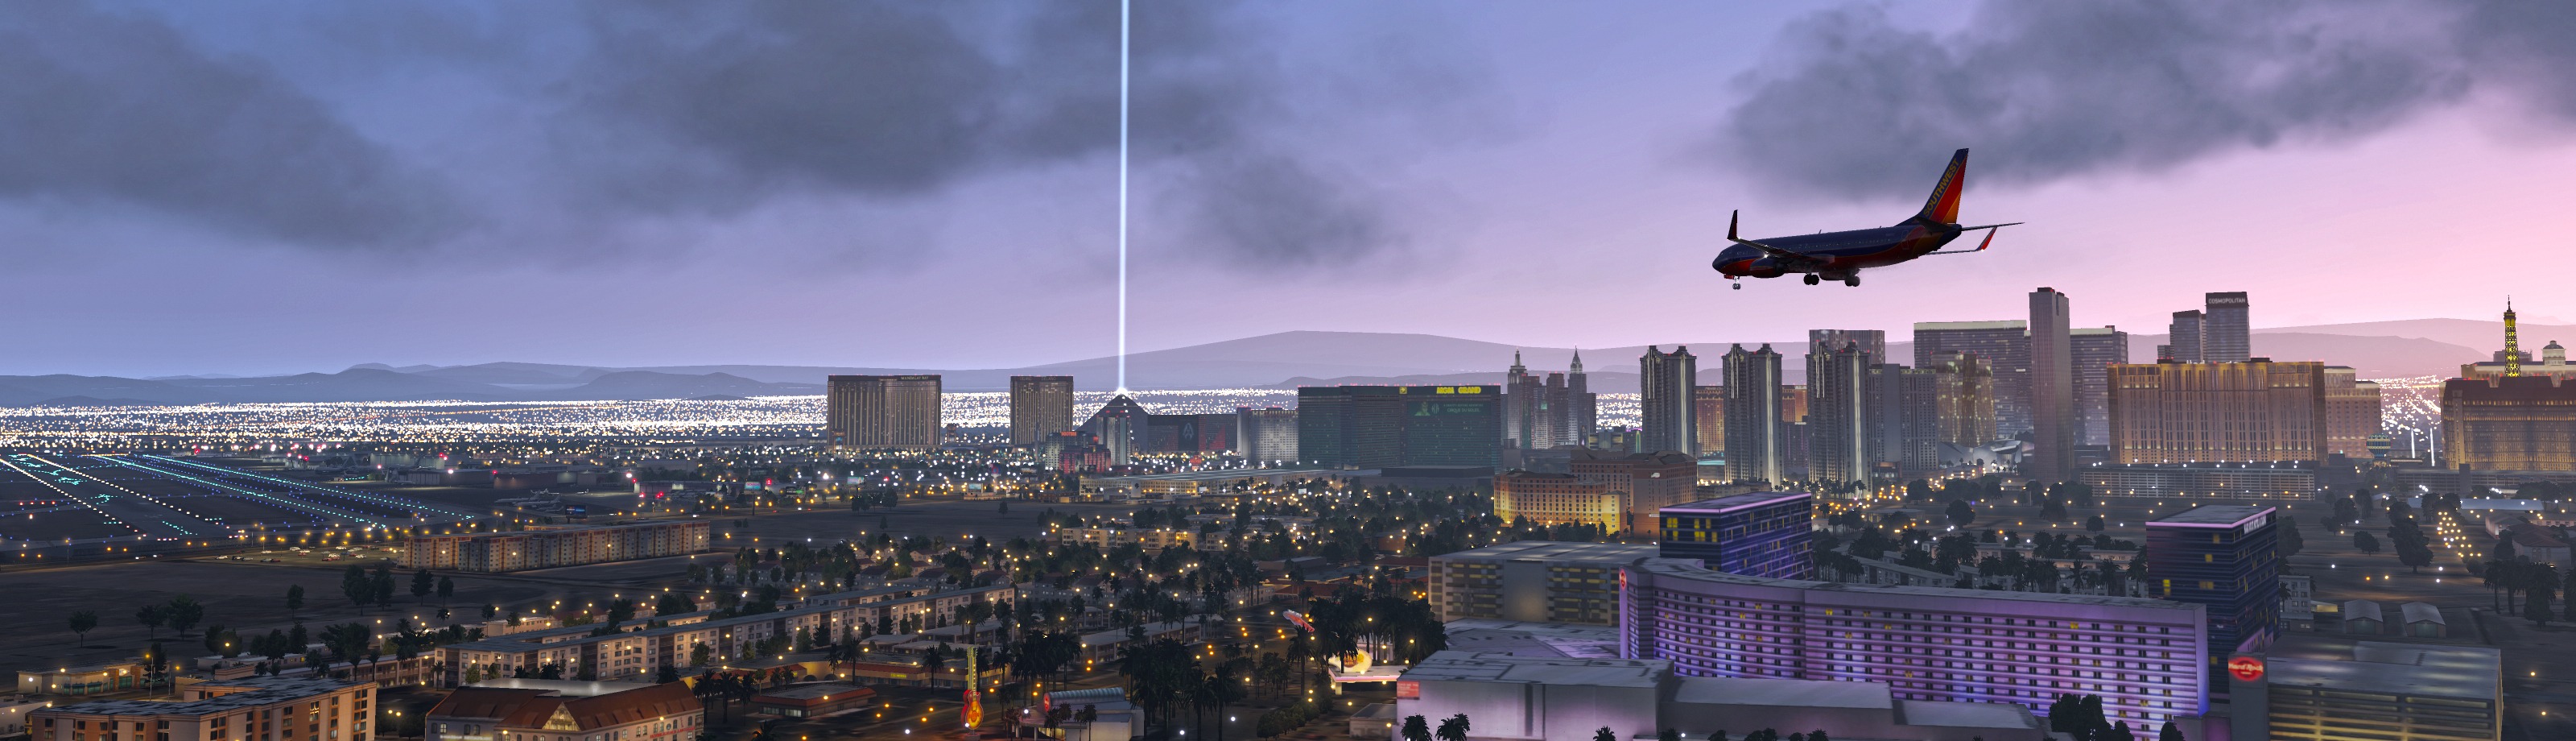 FlyTampa Release Las Vegas For X-Plane 11